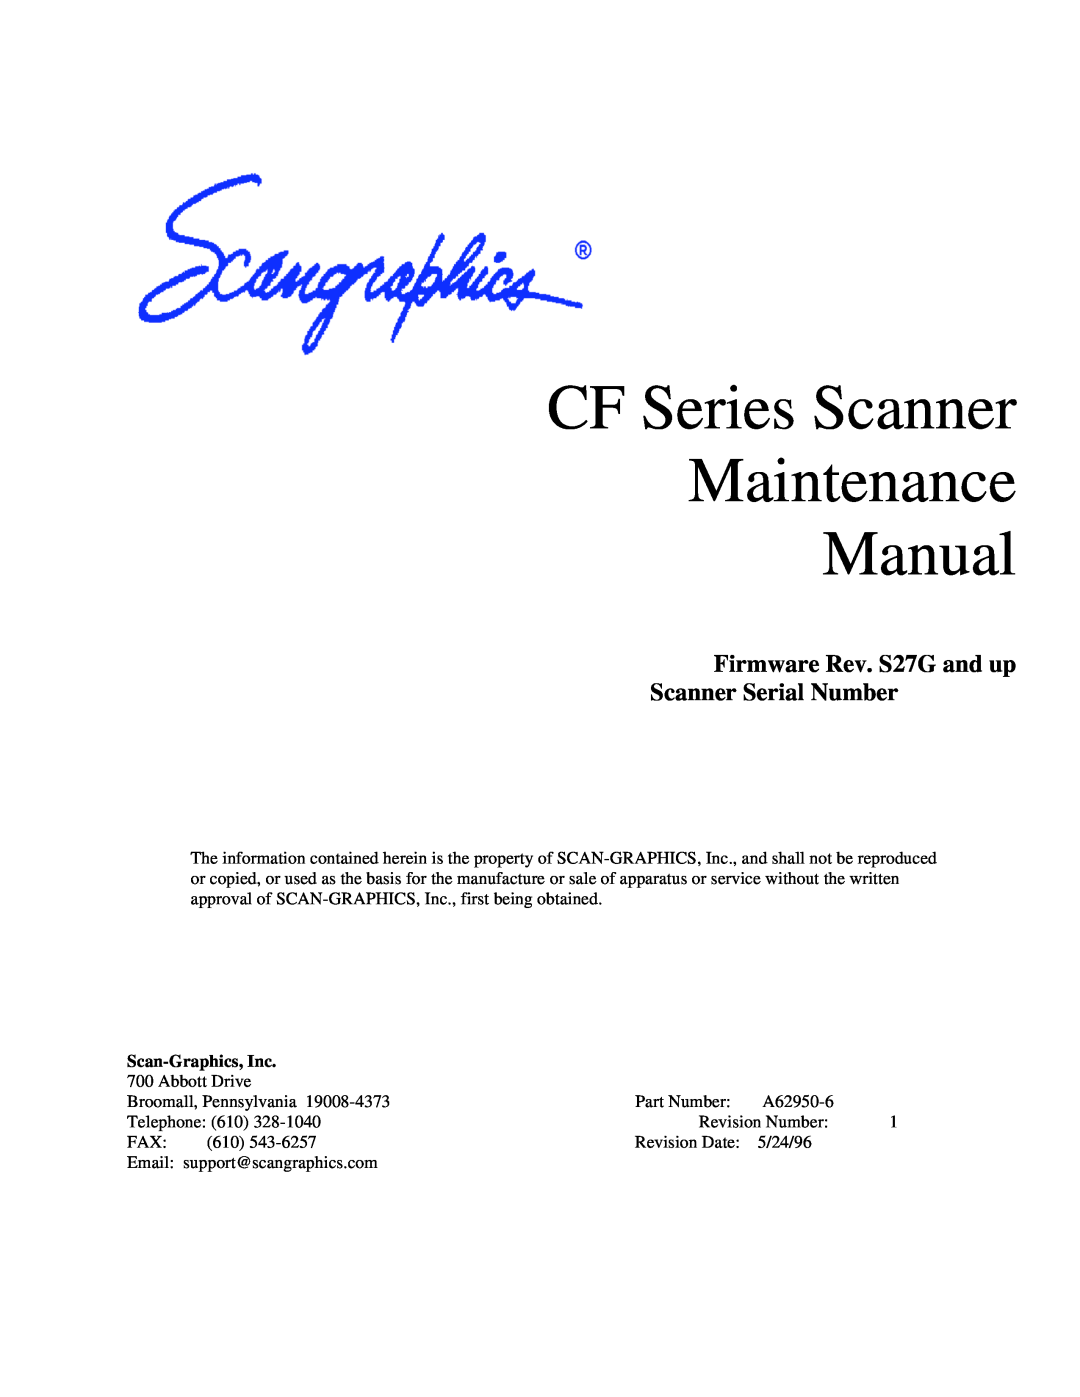 IBM manual Firmware Rev. S27G and up Scanner Serial Number, CF Series Scanner Maintenance Manual, Scan-Graphics, Inc 